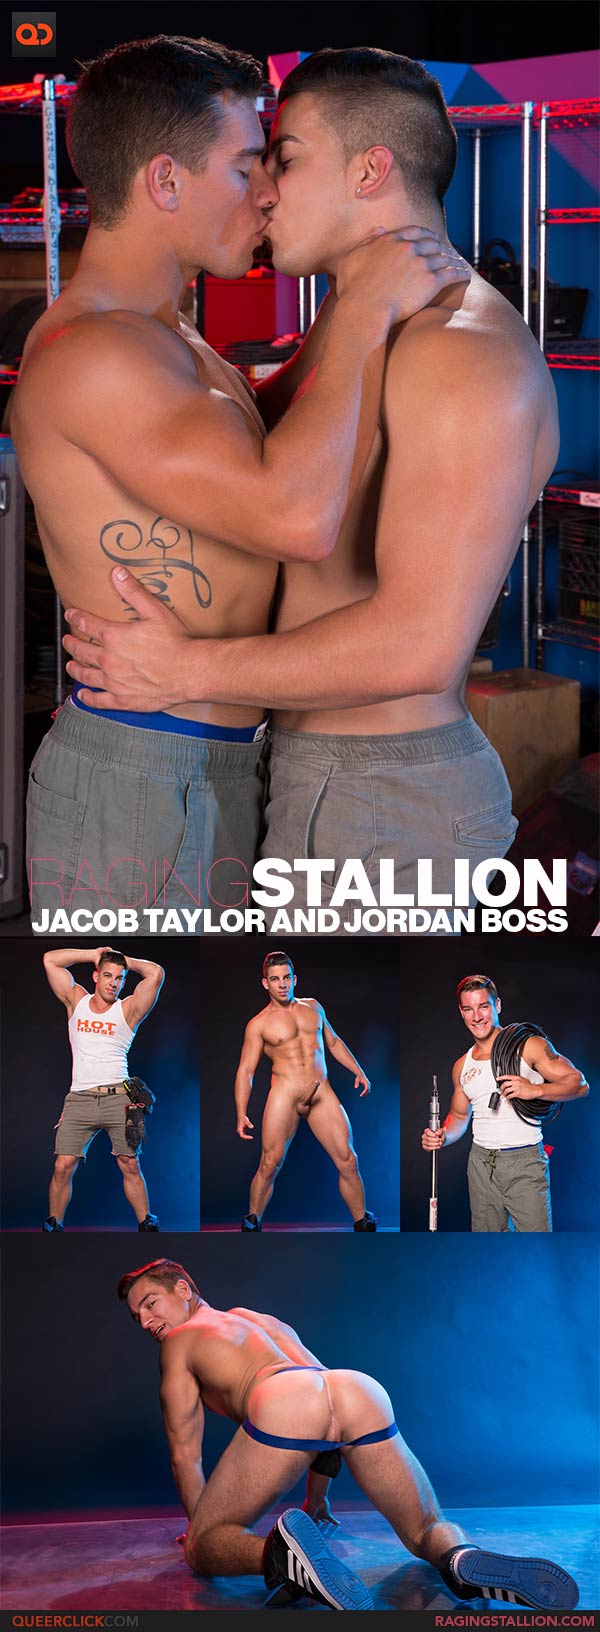 Raging Stallion: Jacob Taylor and Jordan Boss